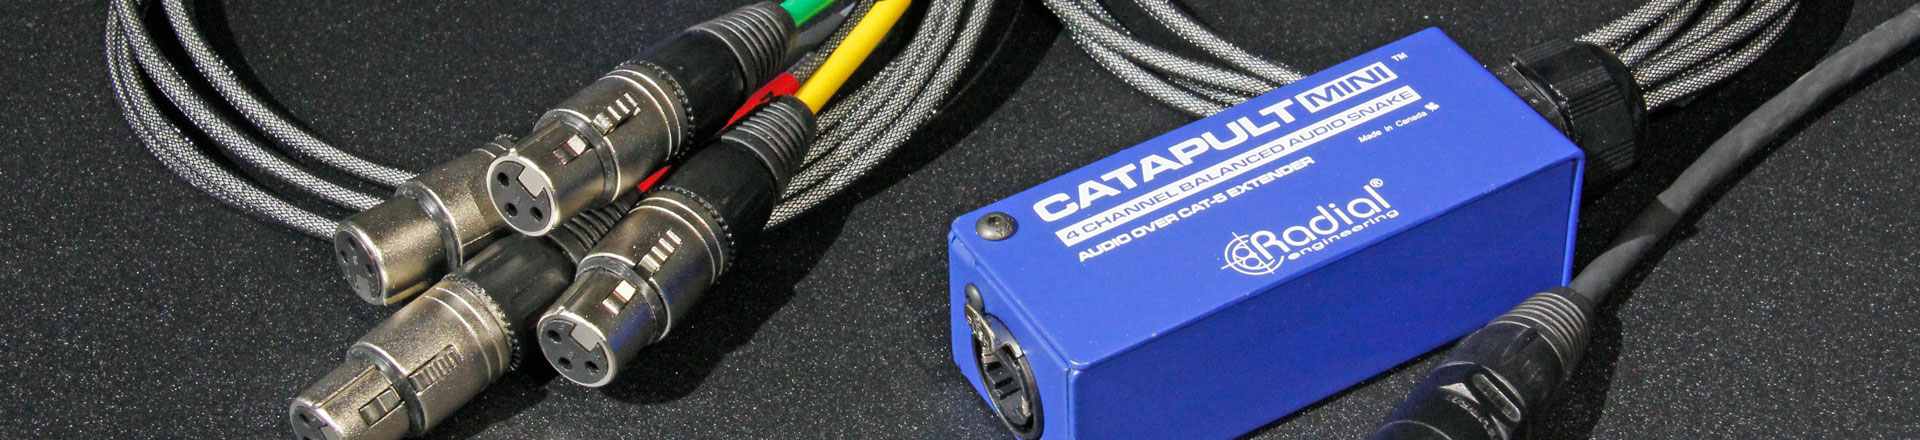 Catapult Mini System - Katapulta dźwięku od Radial Engineering